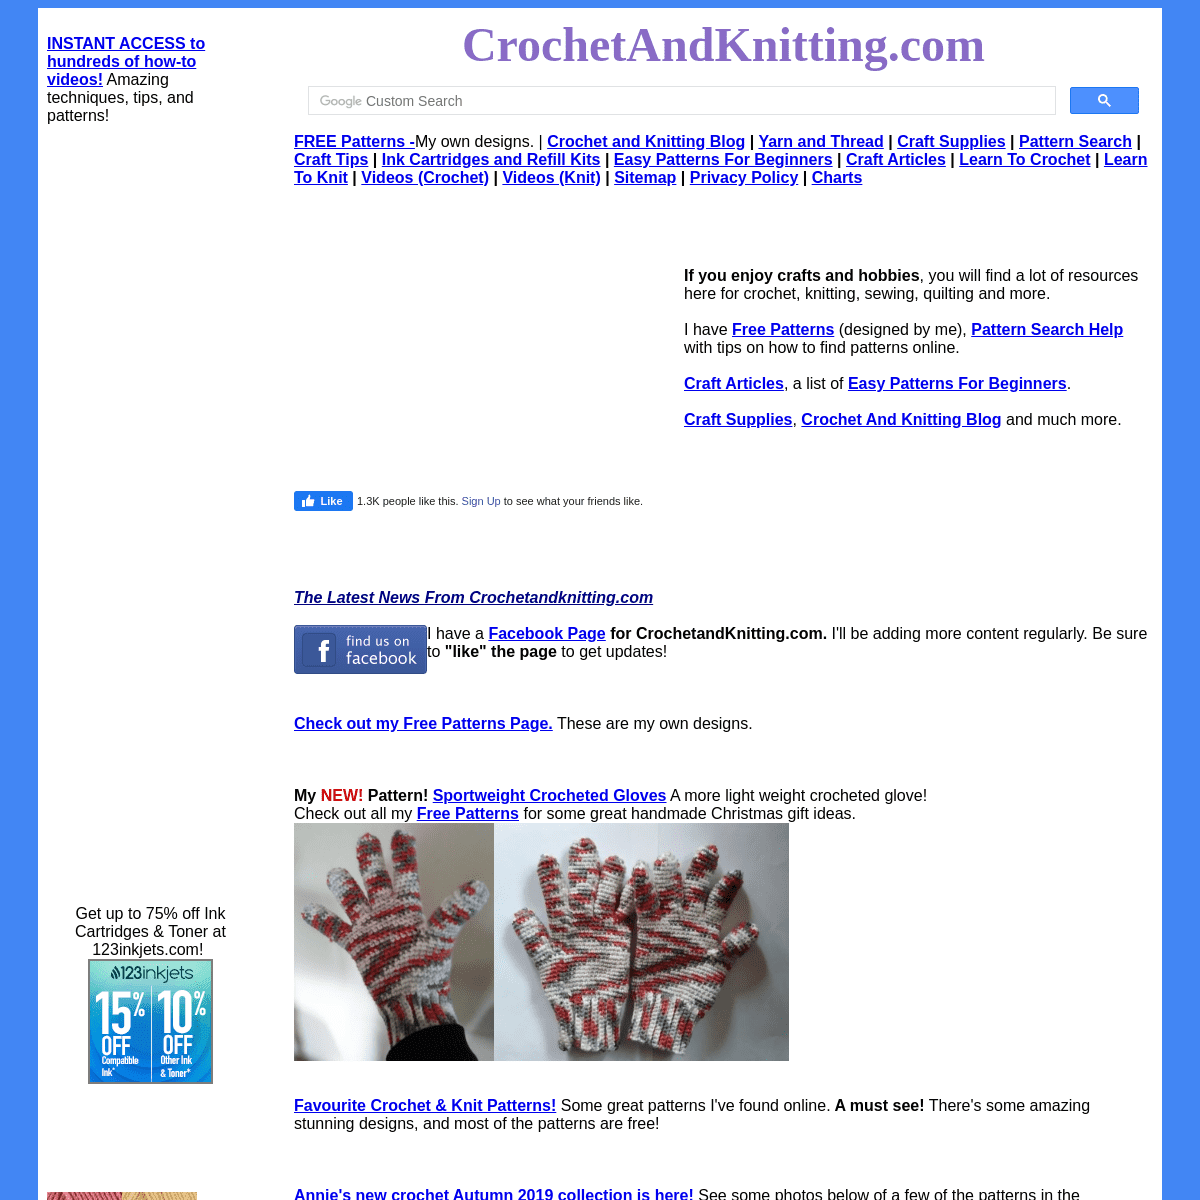 A complete backup of crochetandknitting.com